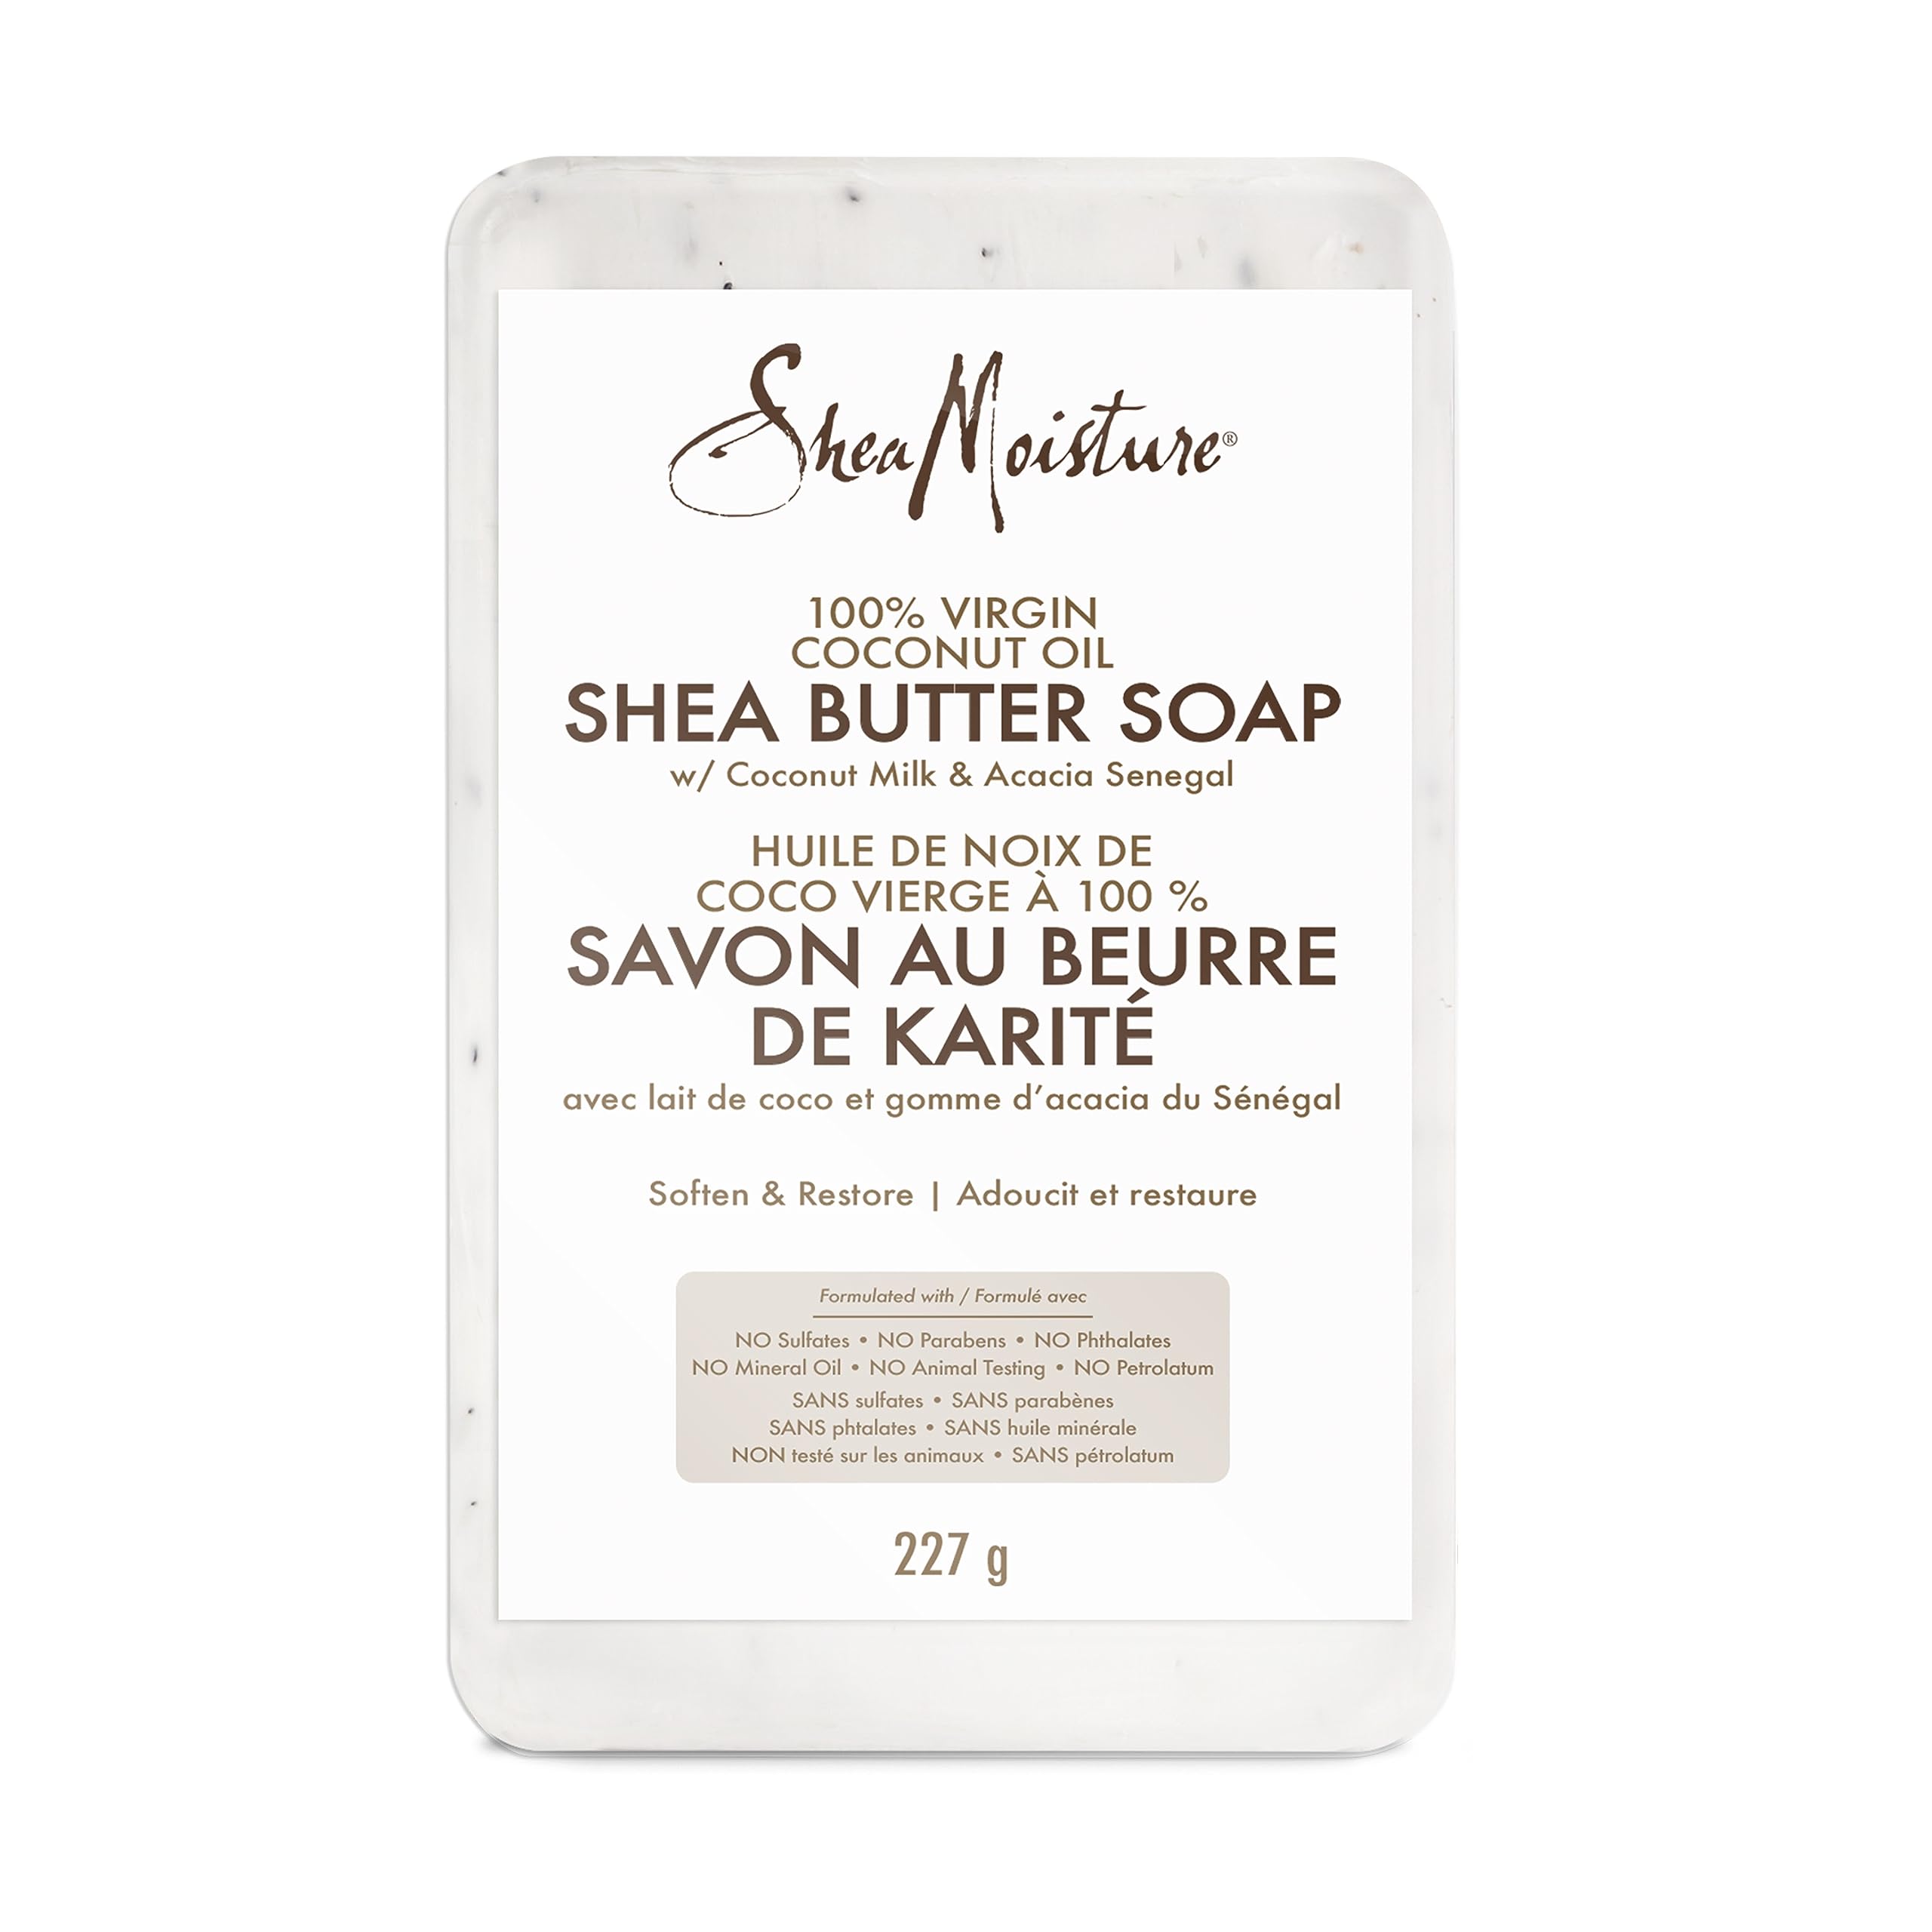 SheaMoisture Bar Soap for all Skin Types Shea Butter Soap Shea Butter 100% Virgin Coconut Oil Cruelty Free Skin Care 8 oz